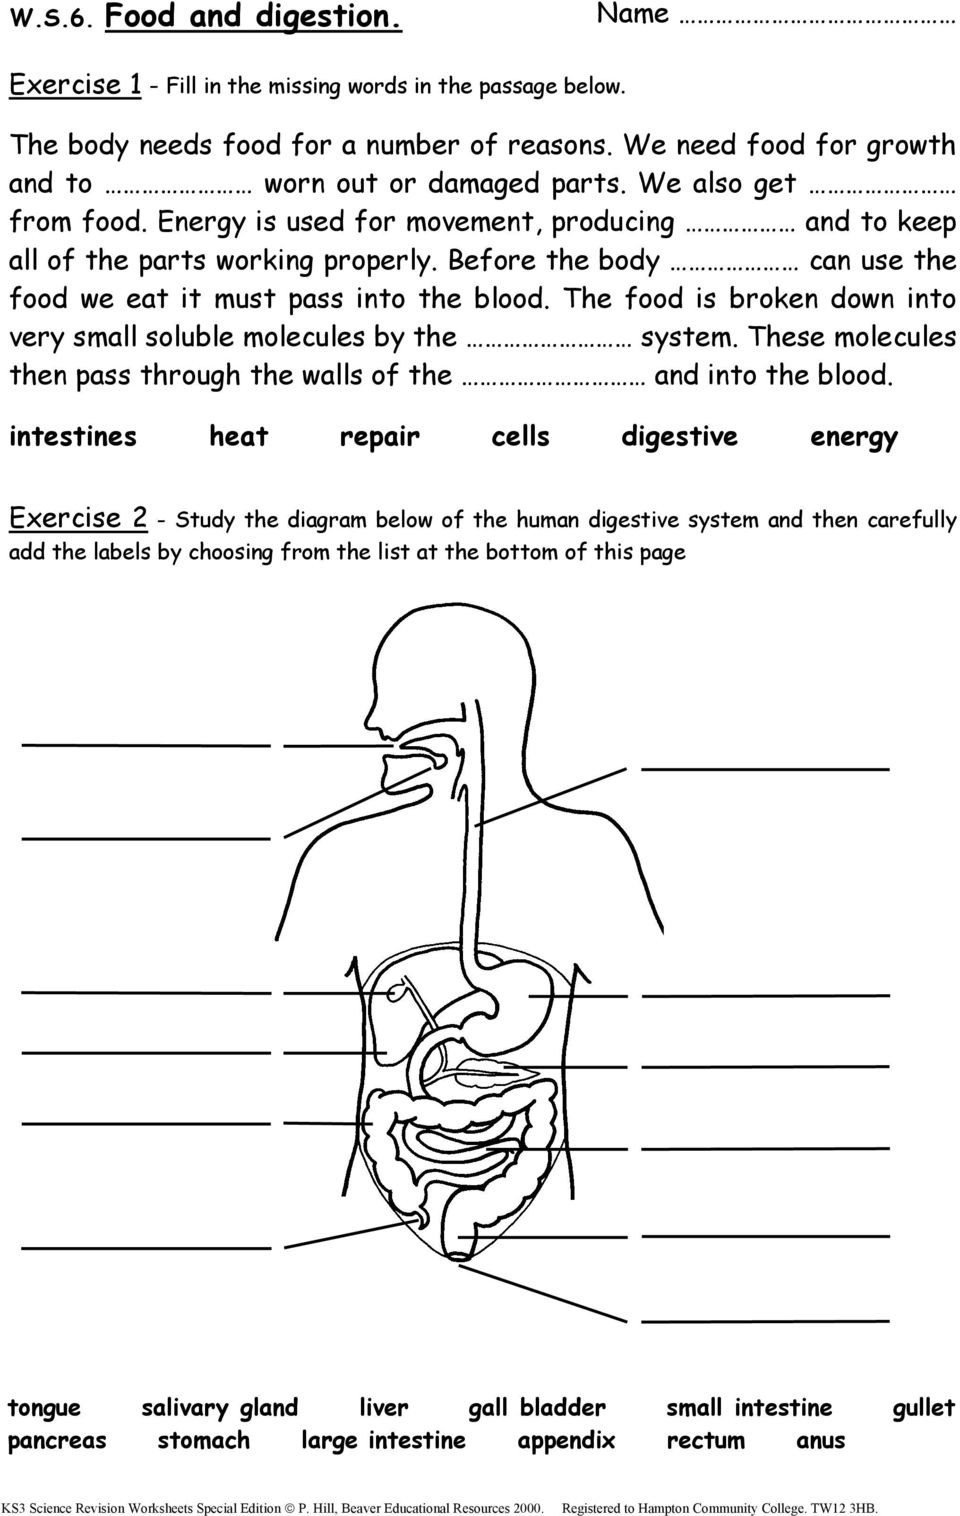 6th-grade-science-worksheet-pdf